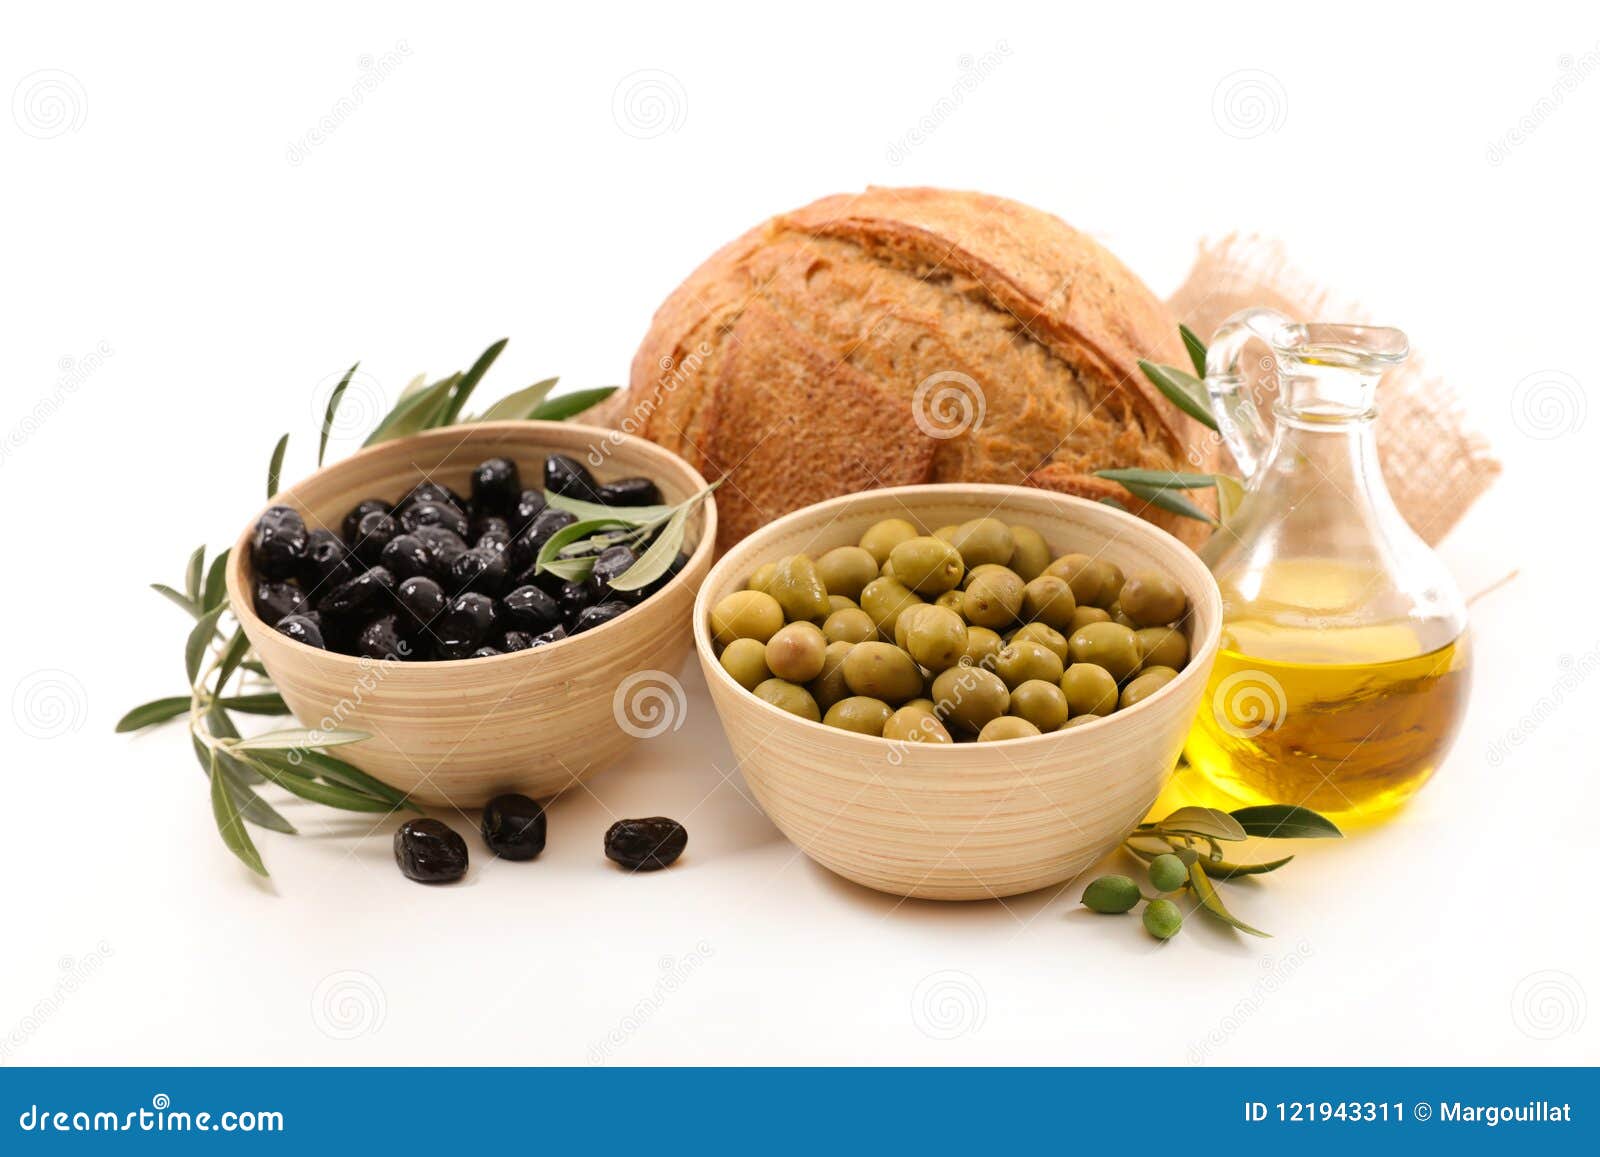 Bread olive oil. Хлеб с оливковым маслом. Хлеб с маслинами. Хлеб обогащенный оливками. Снеки оливки хлеб.